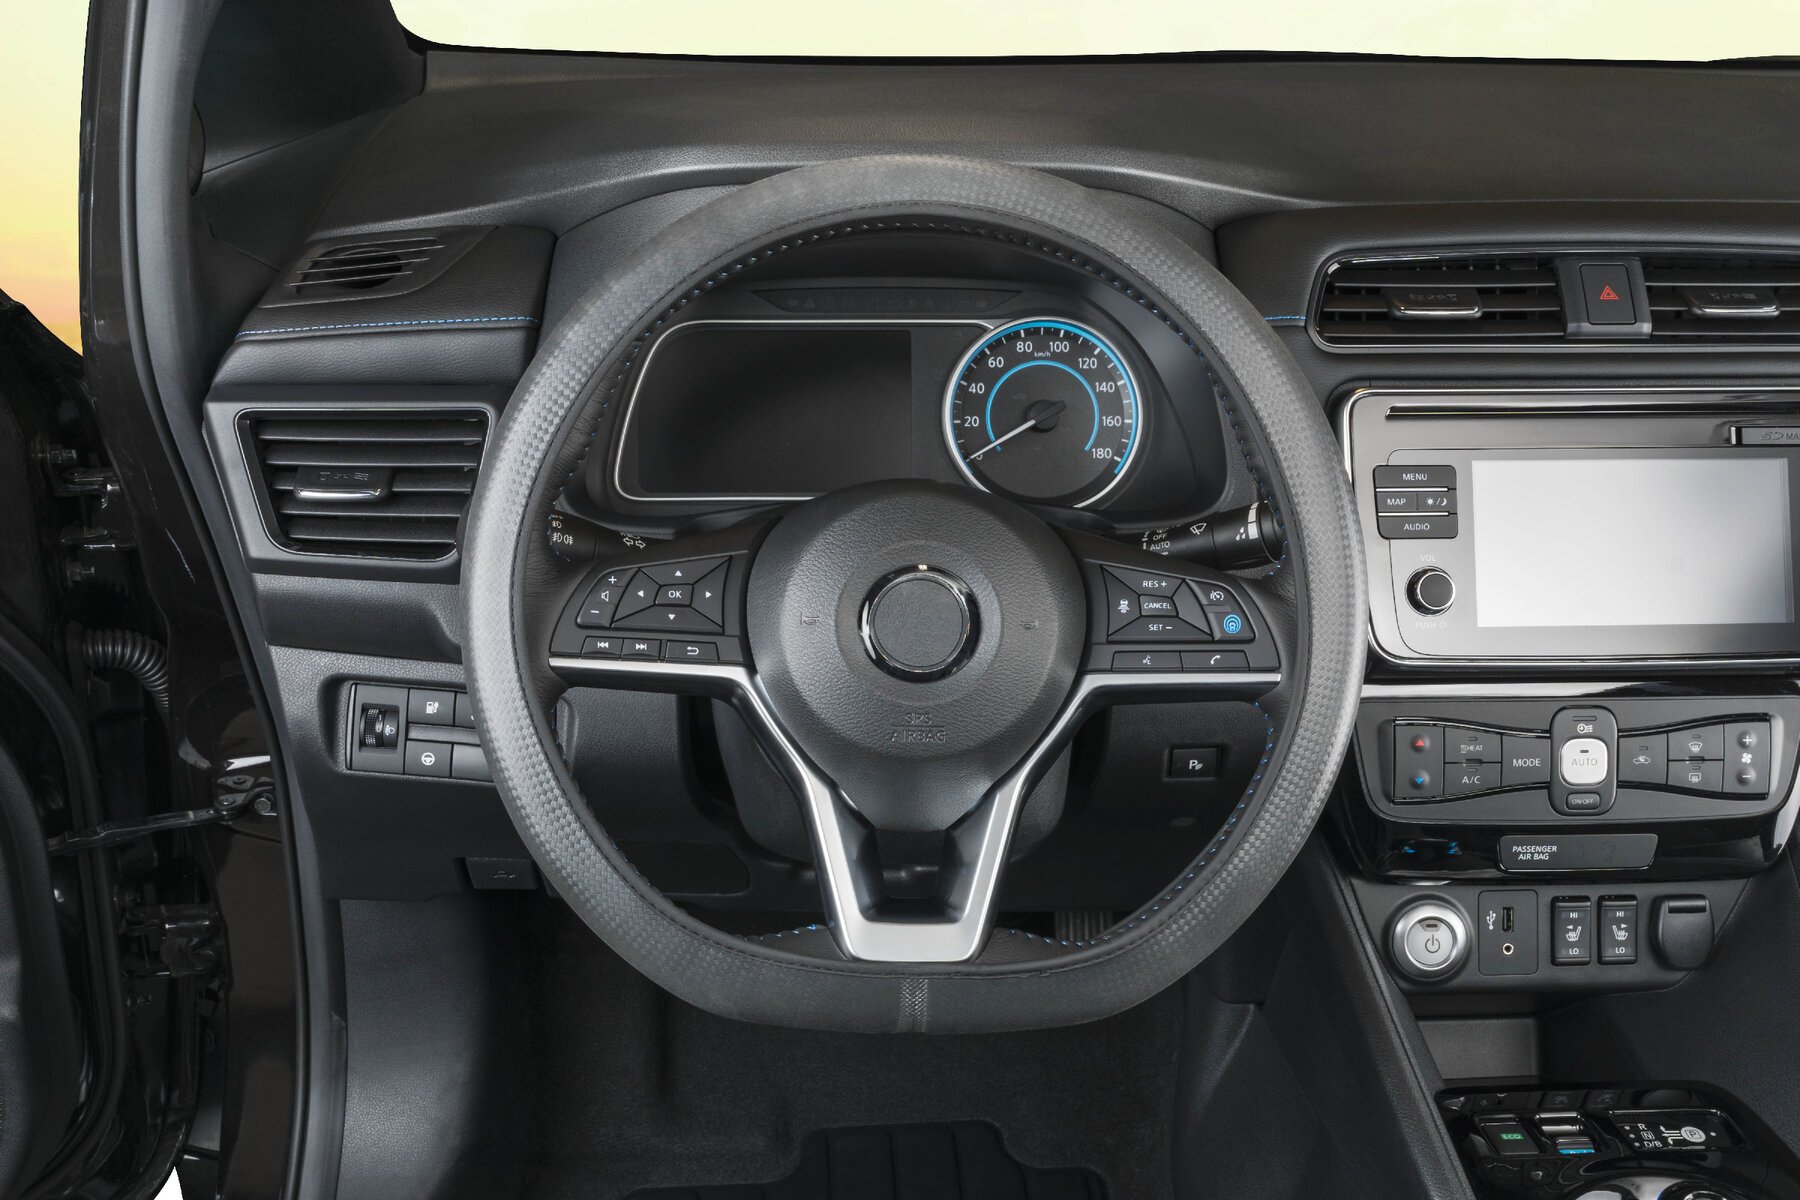 Steering wheel cover Soft Grip Carbon - 38 cm black